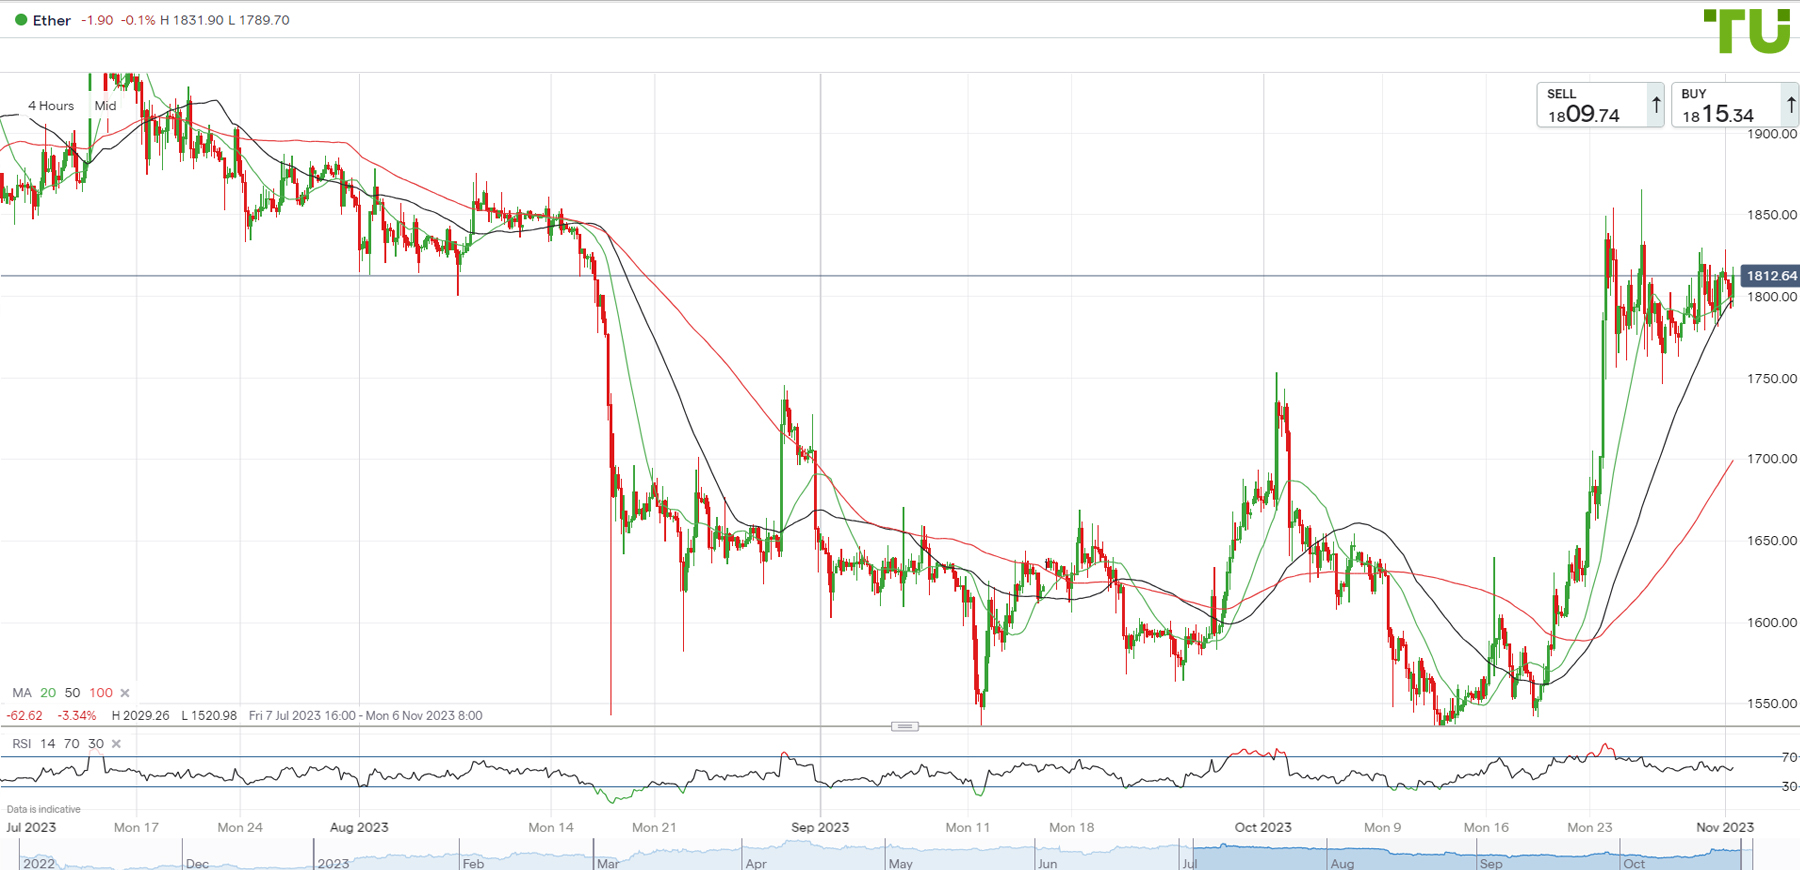 ETH/USD is trading in a range